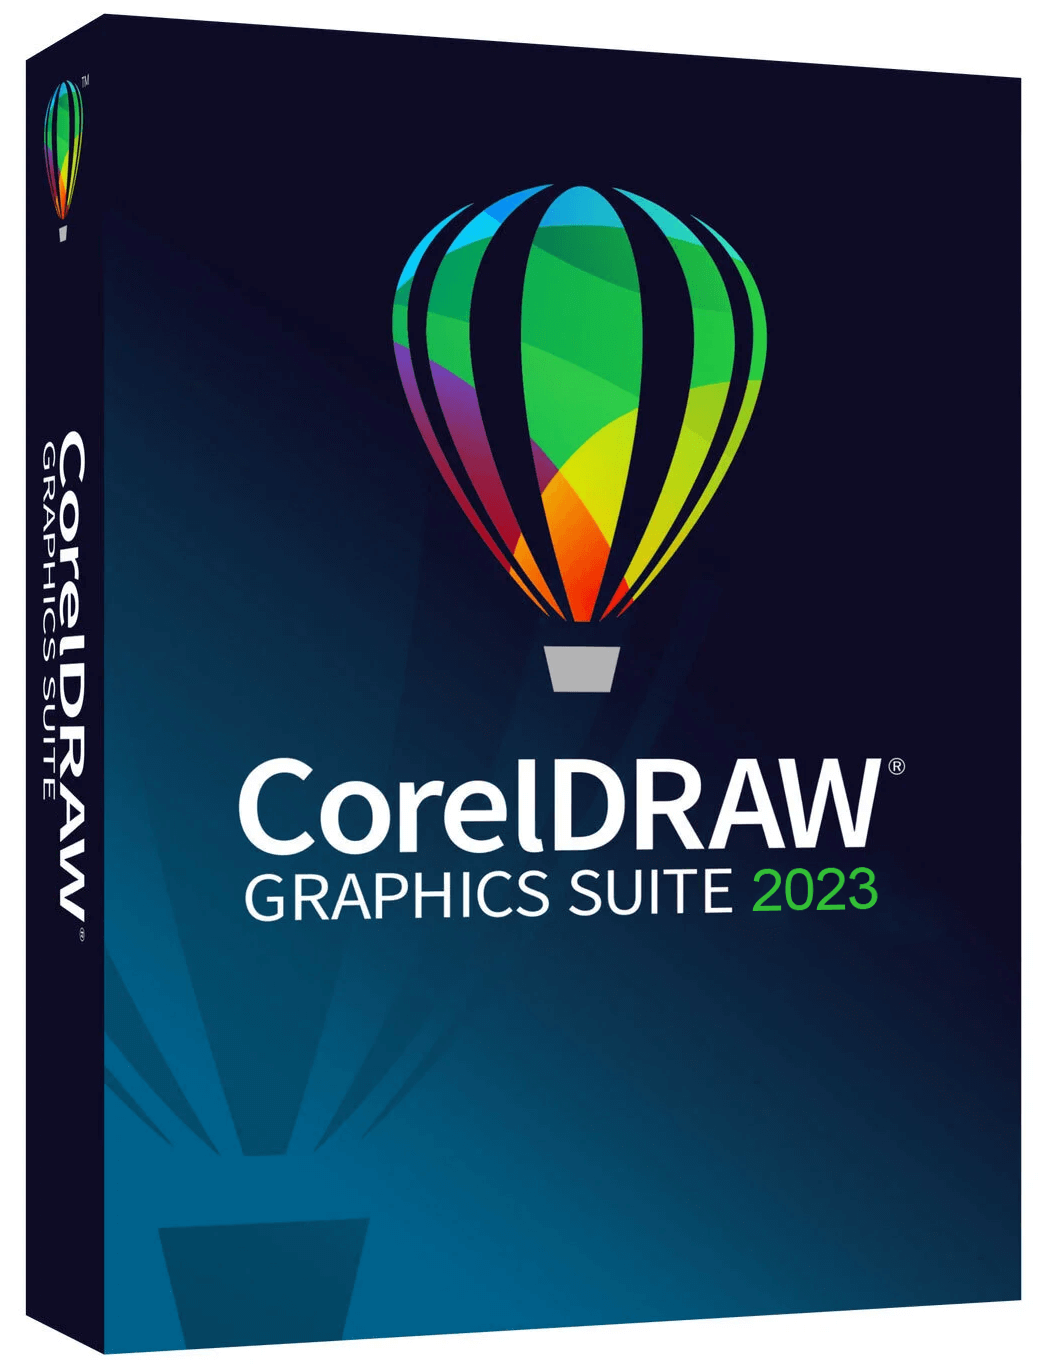 Latest updates in CorelDRAW Graphics Suite boost creativity